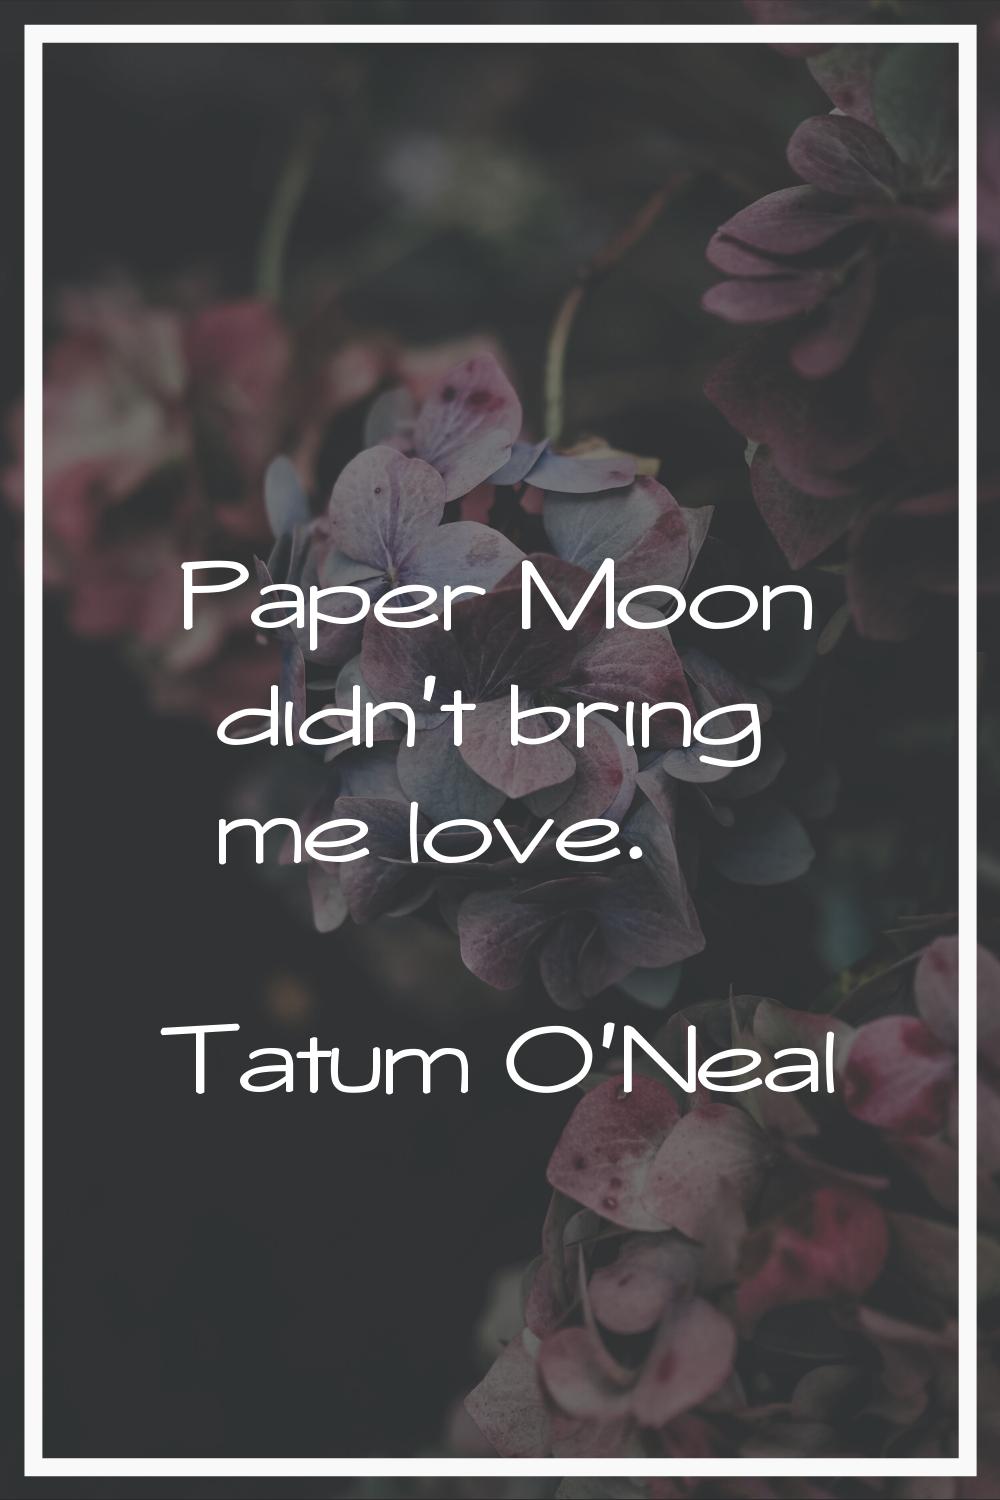 Paper Moon didn't bring me love.